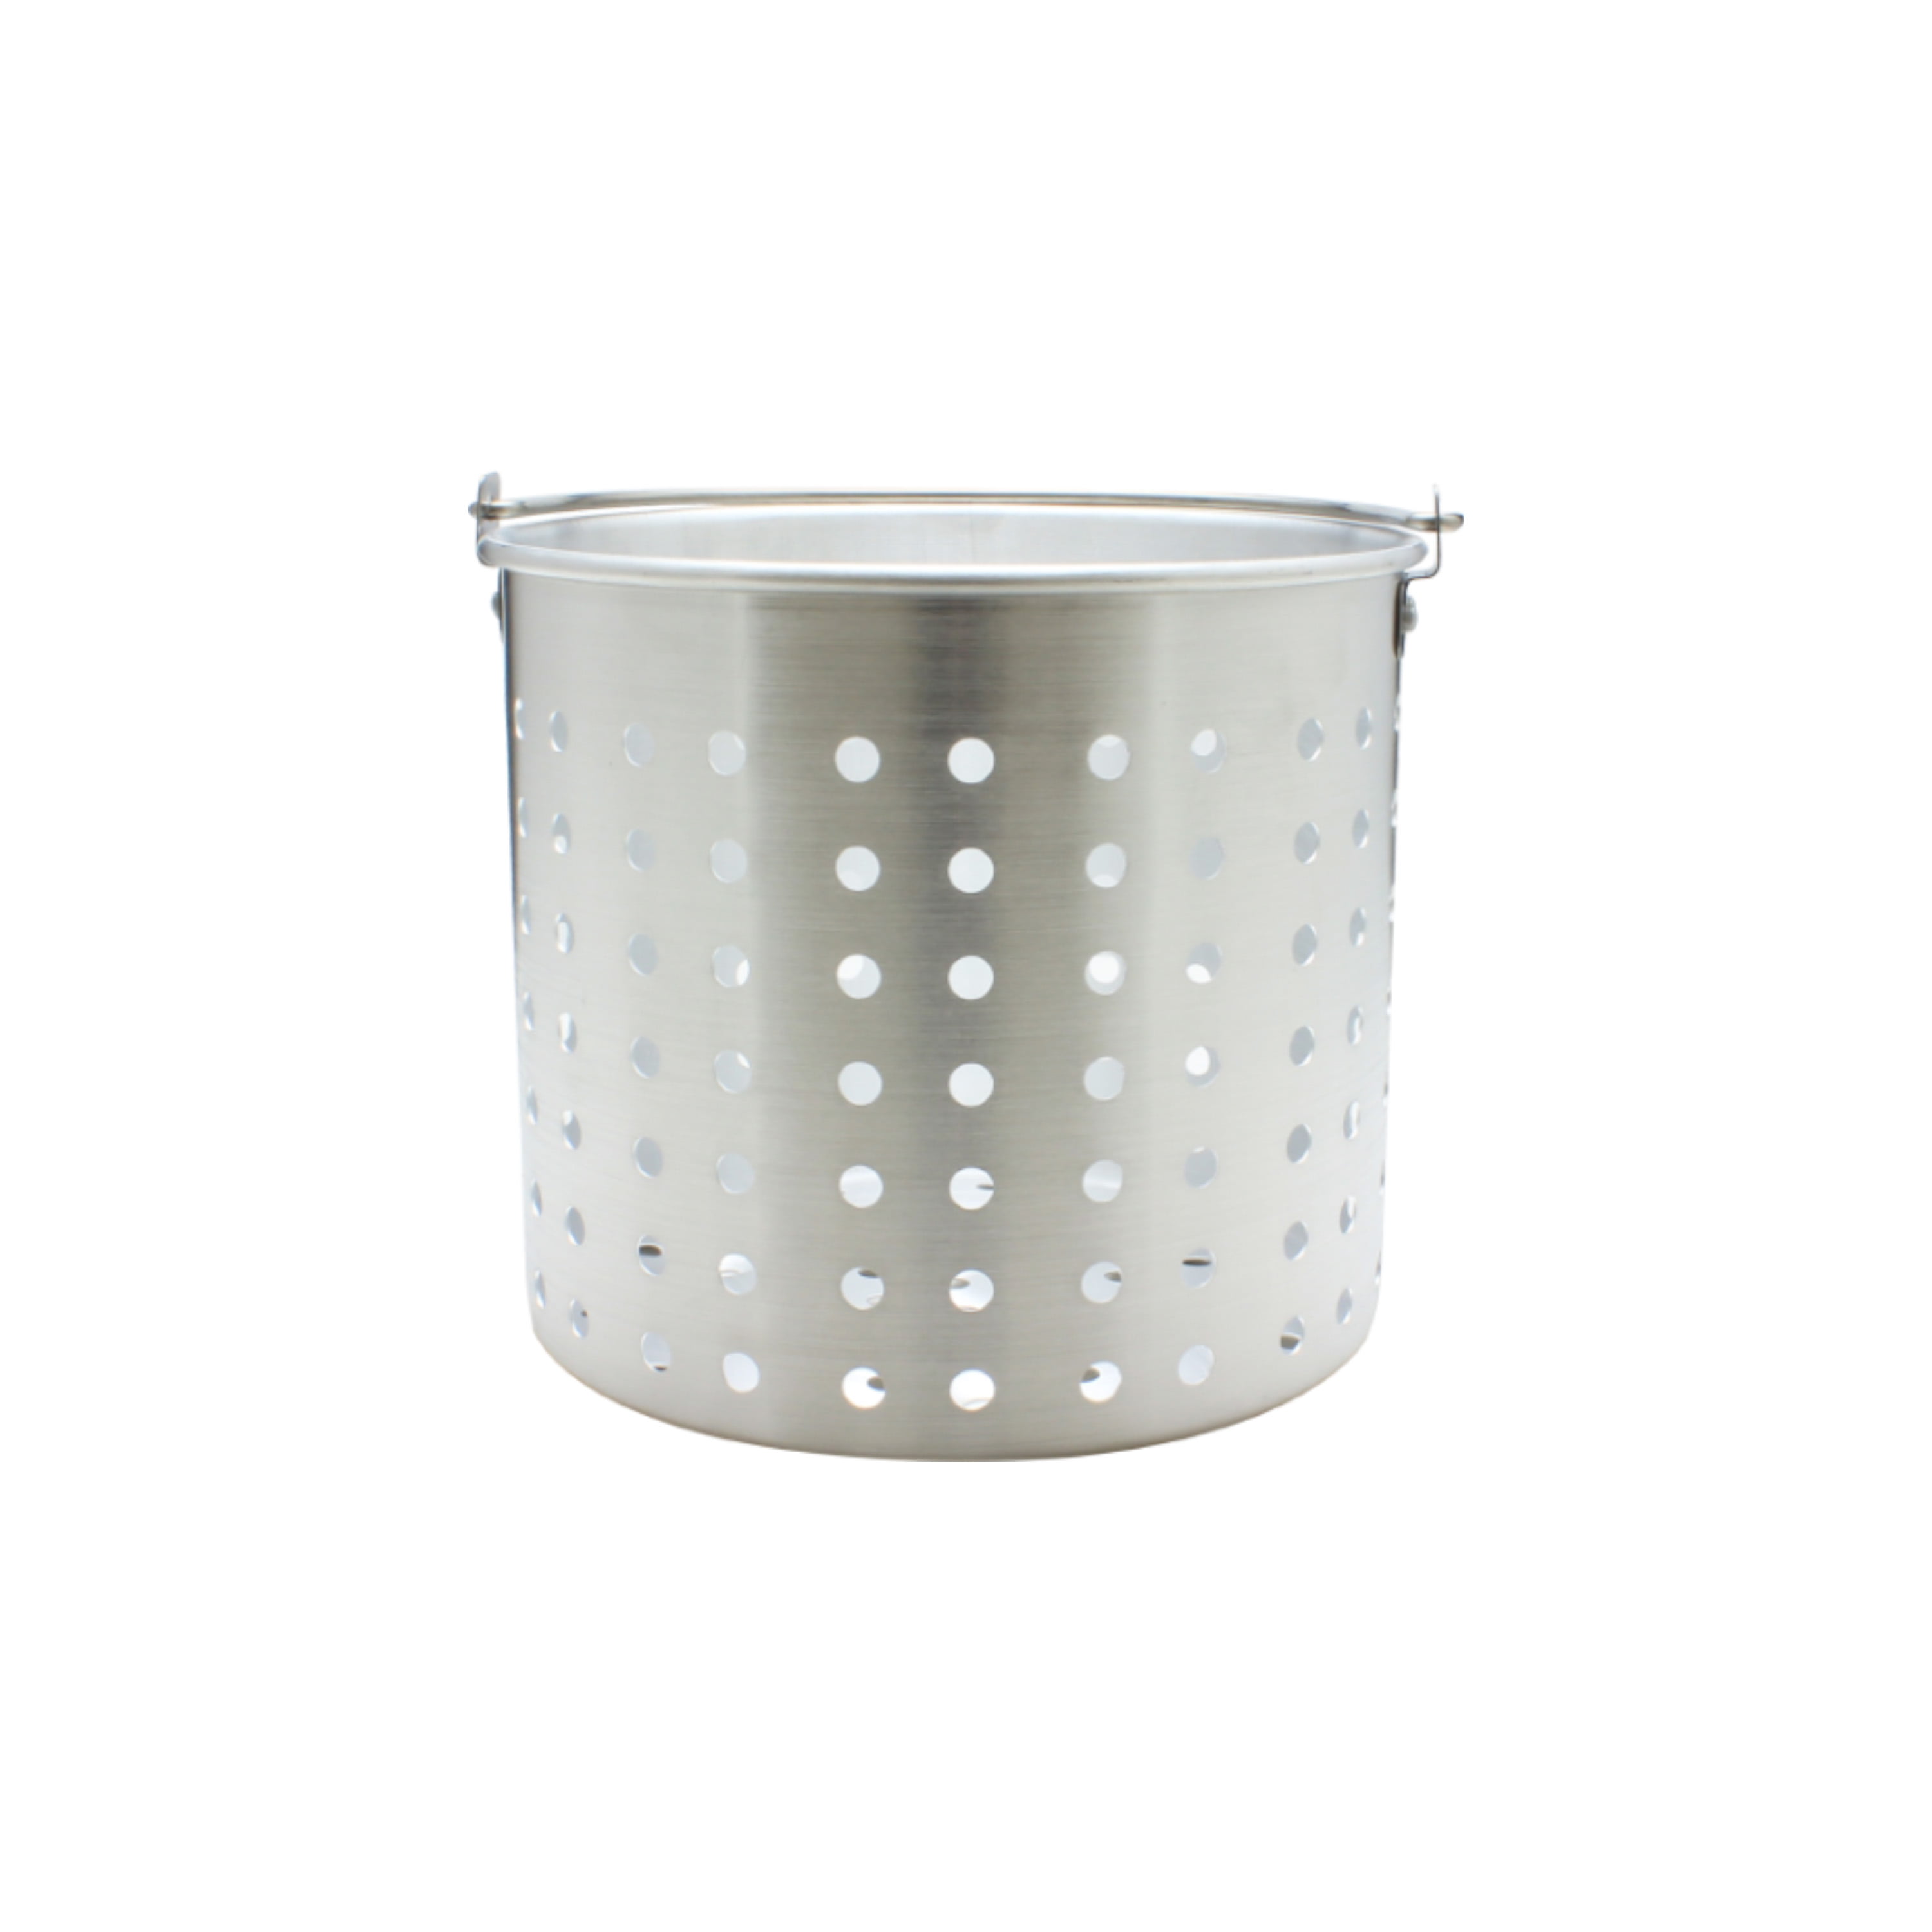 Excellante 40 quart Aluminum steamer basket for stock pot, comes in each -  Walmart.com